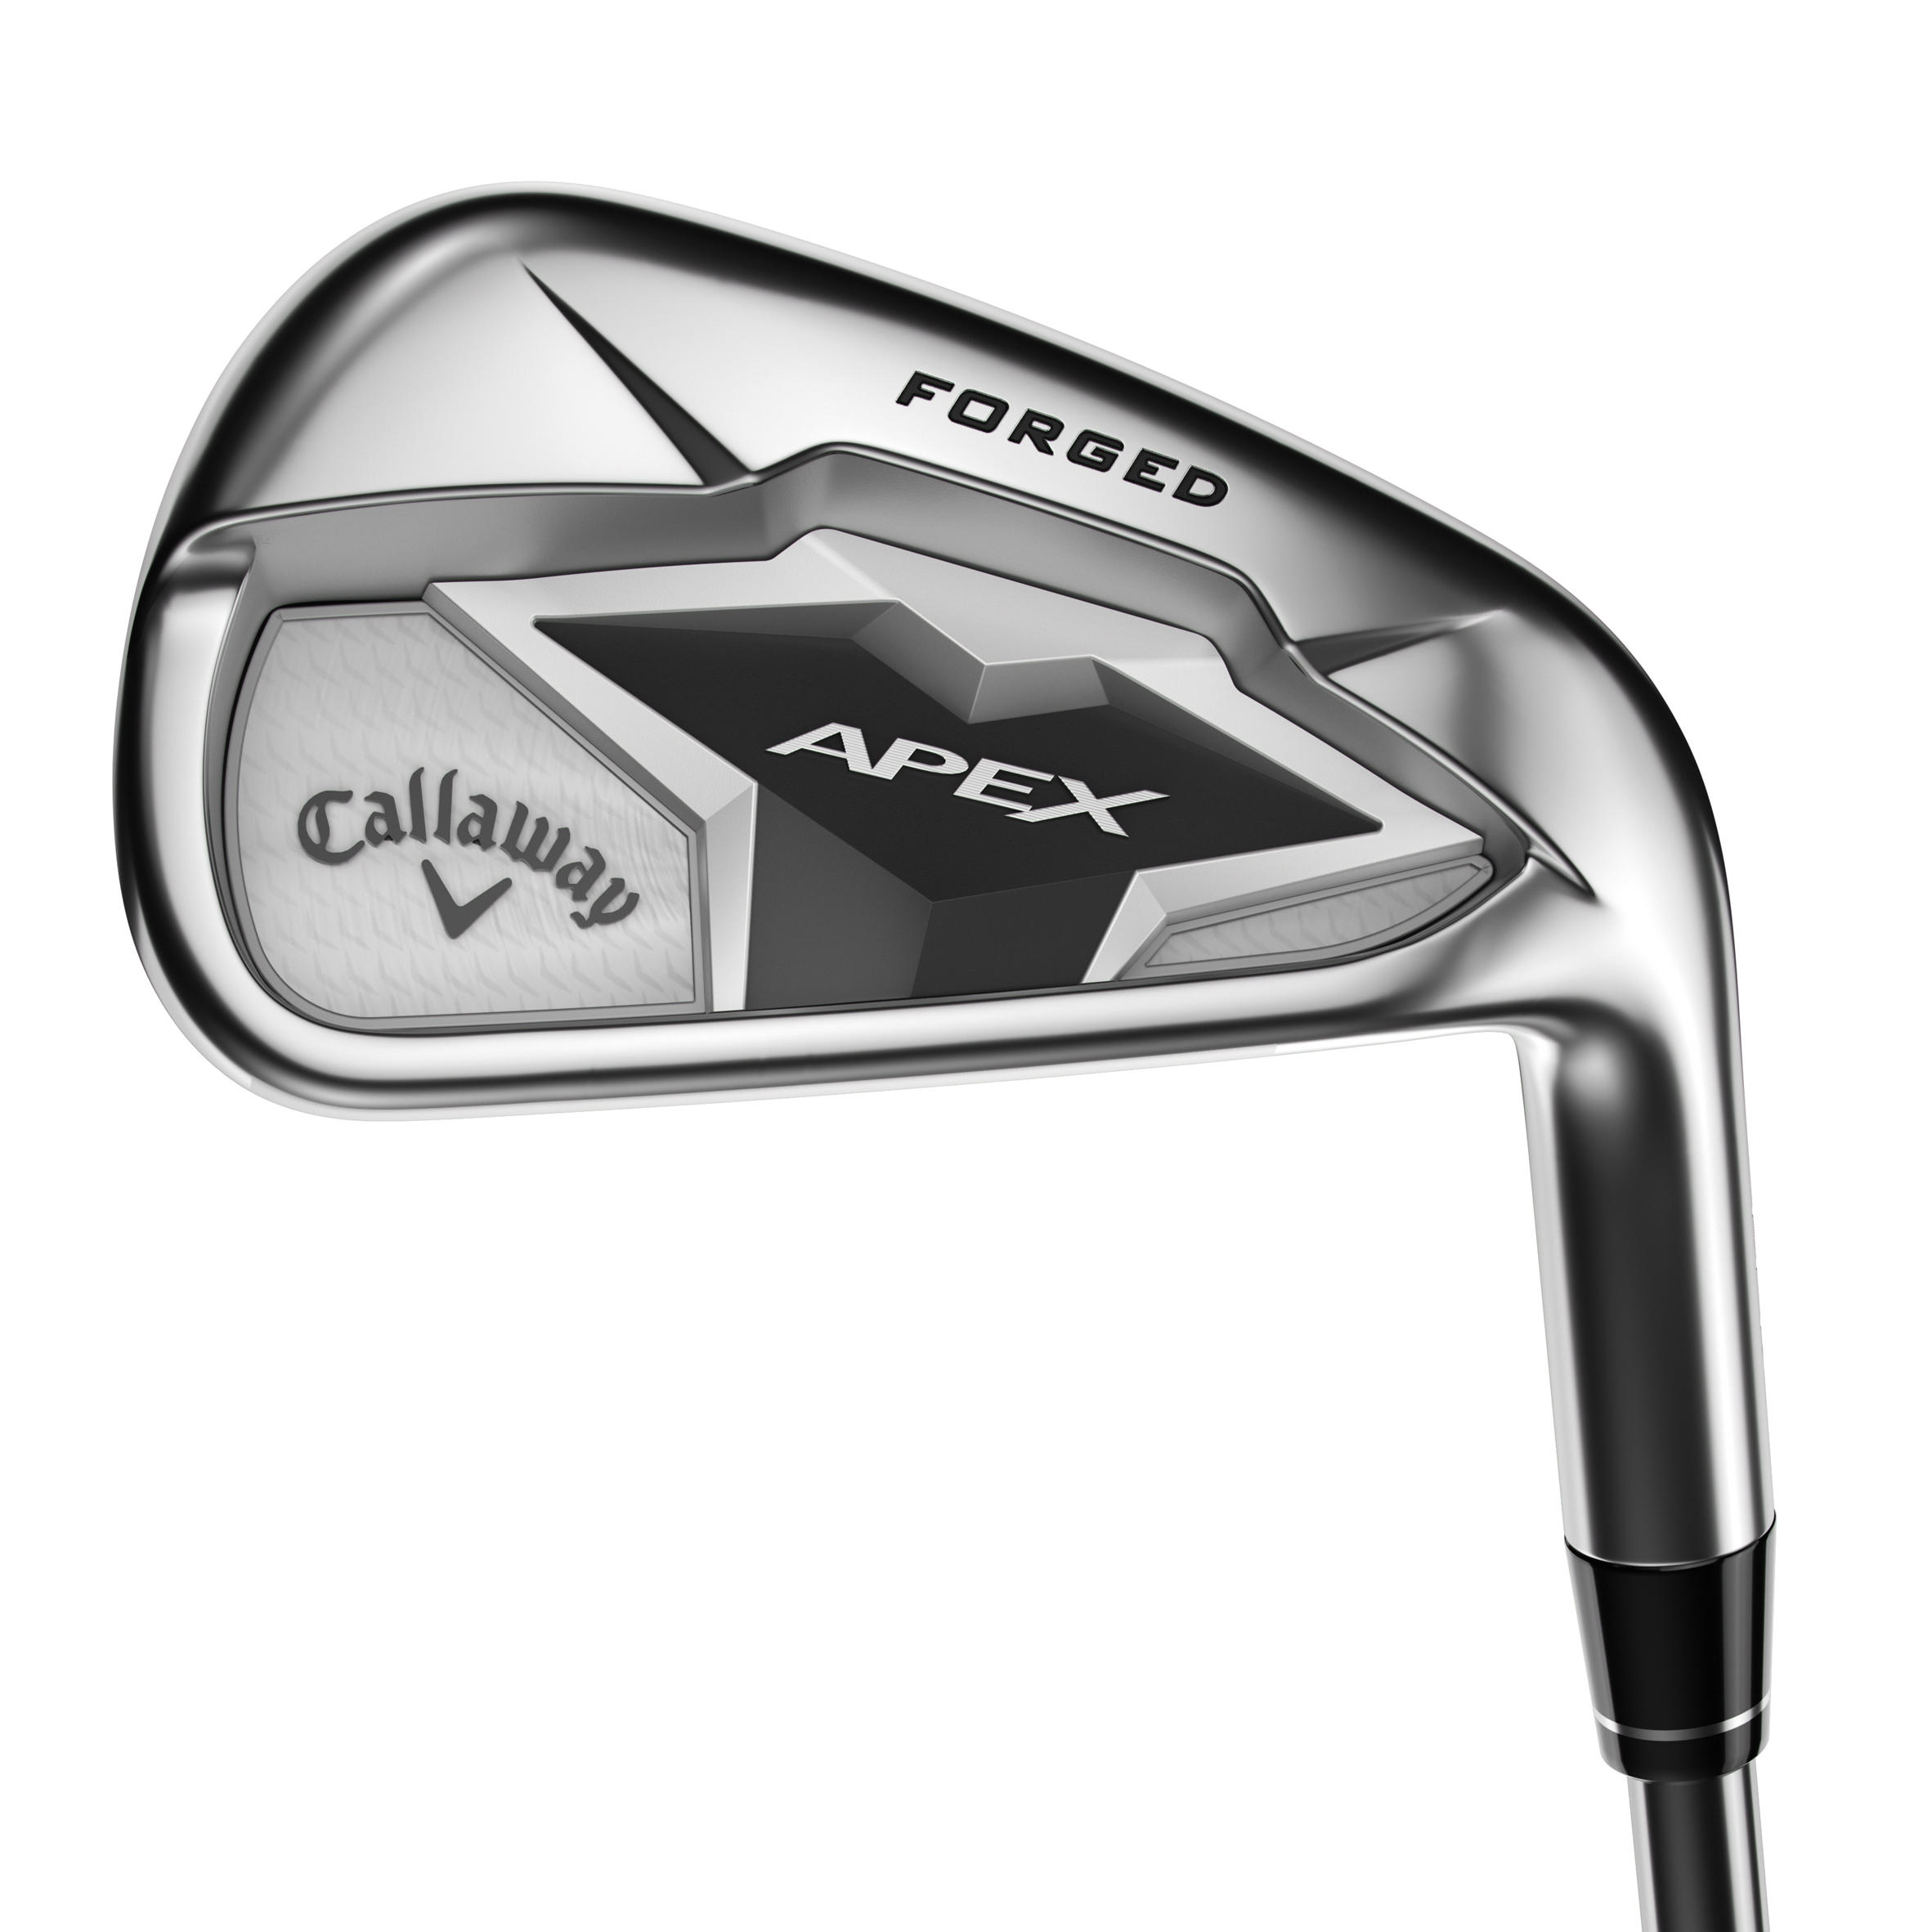 CALLAWAY Set of golf irons right-handed regular - CALLAWAY Apex